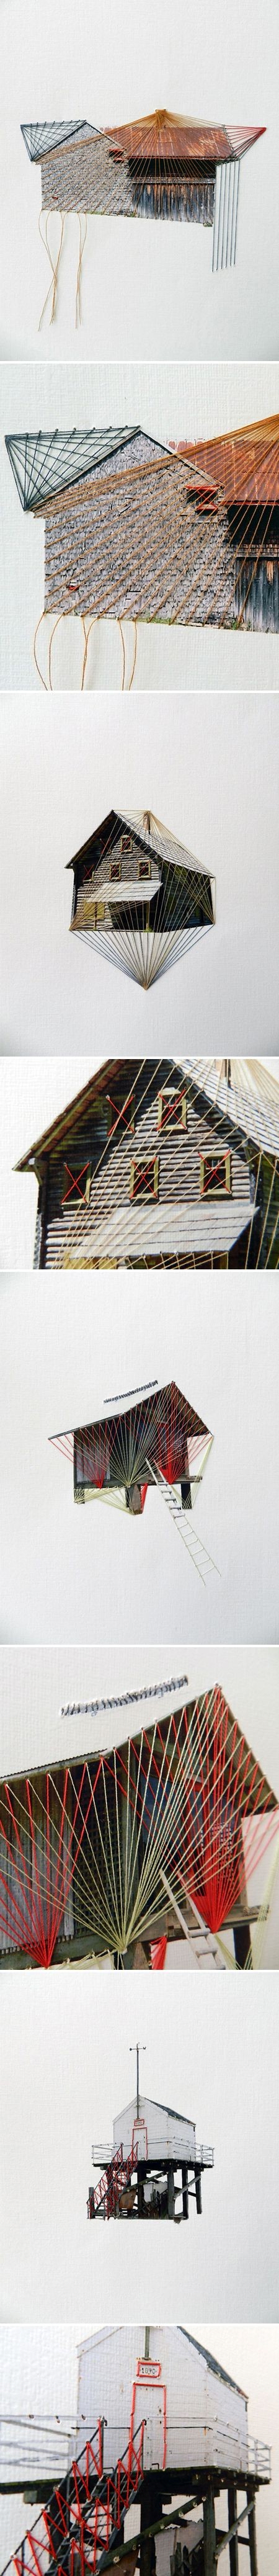 Lonely Houses series by Hagar Vardimon-van Heummen...